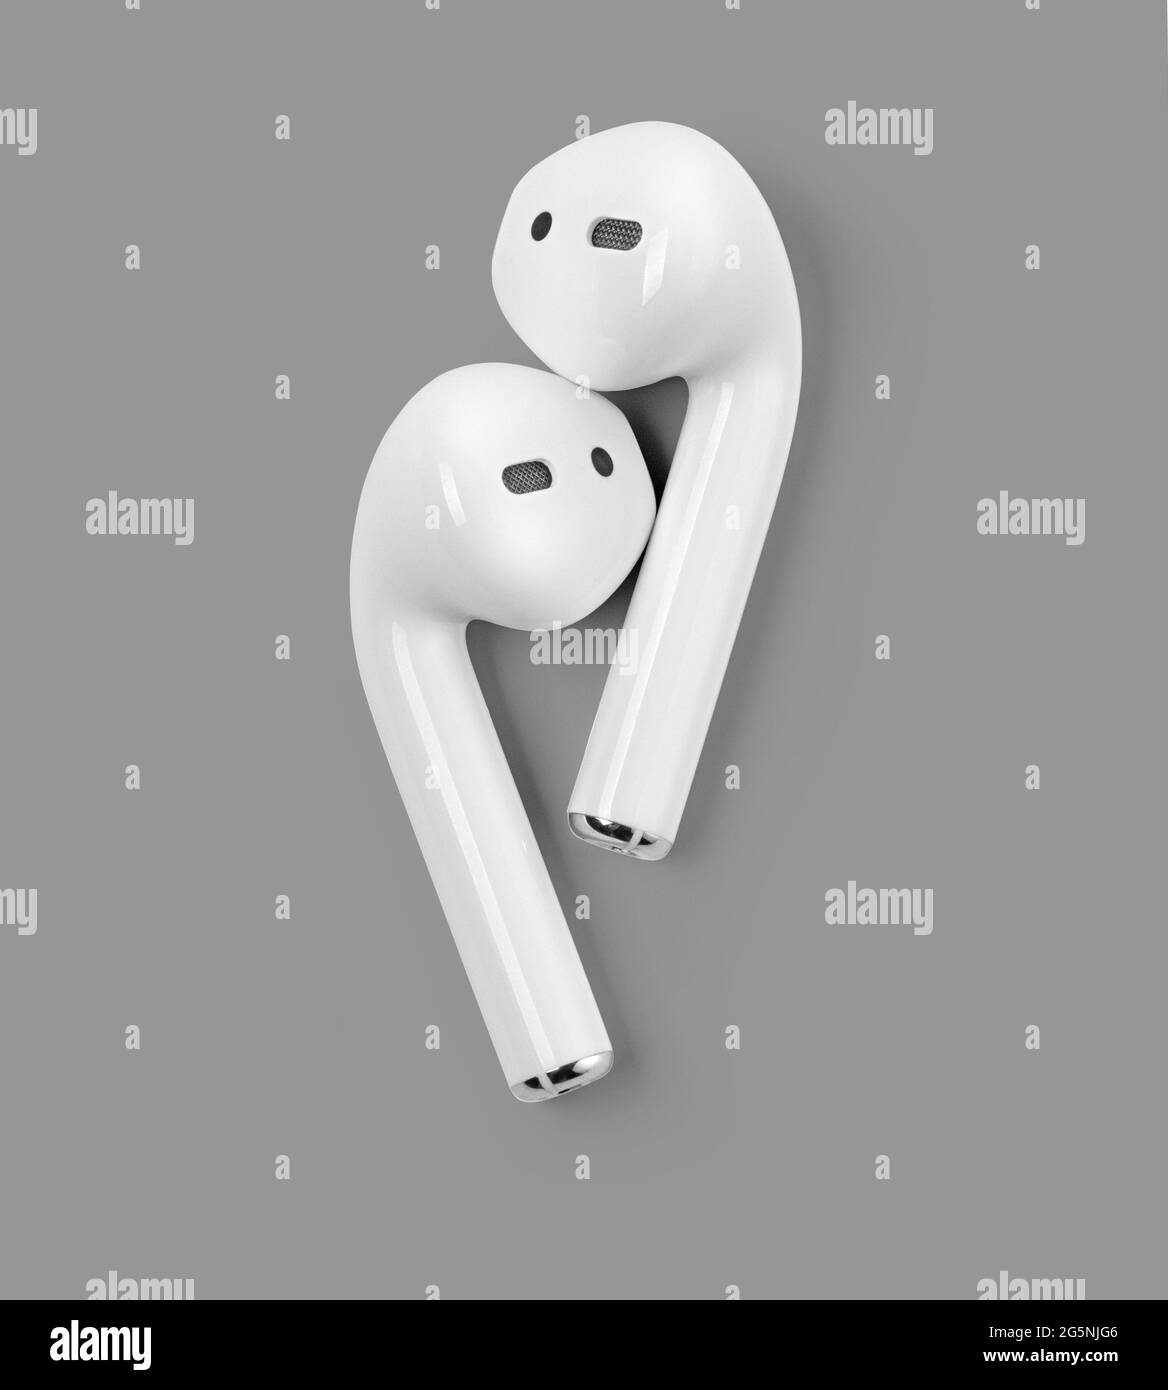 White headphones wireless earphones . White headphones wireless earphones on grey background with clipping path. Stock Photo